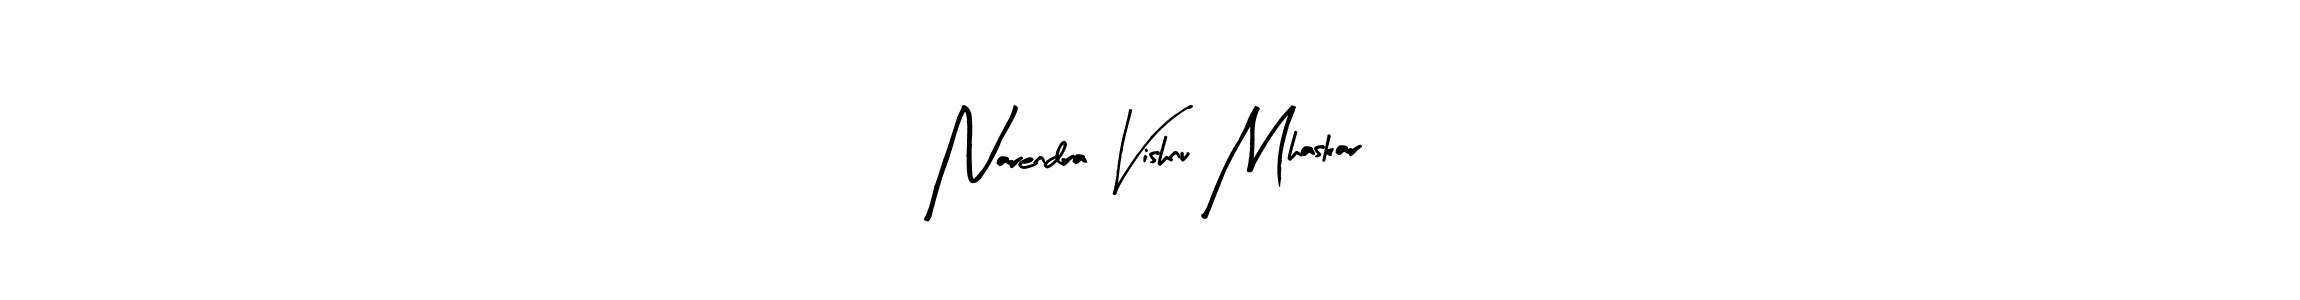 How to Draw Narendra Vishnu Mhaskar signature style? Arty Signature is a latest design signature styles for name Narendra Vishnu Mhaskar. Narendra Vishnu Mhaskar signature style 8 images and pictures png